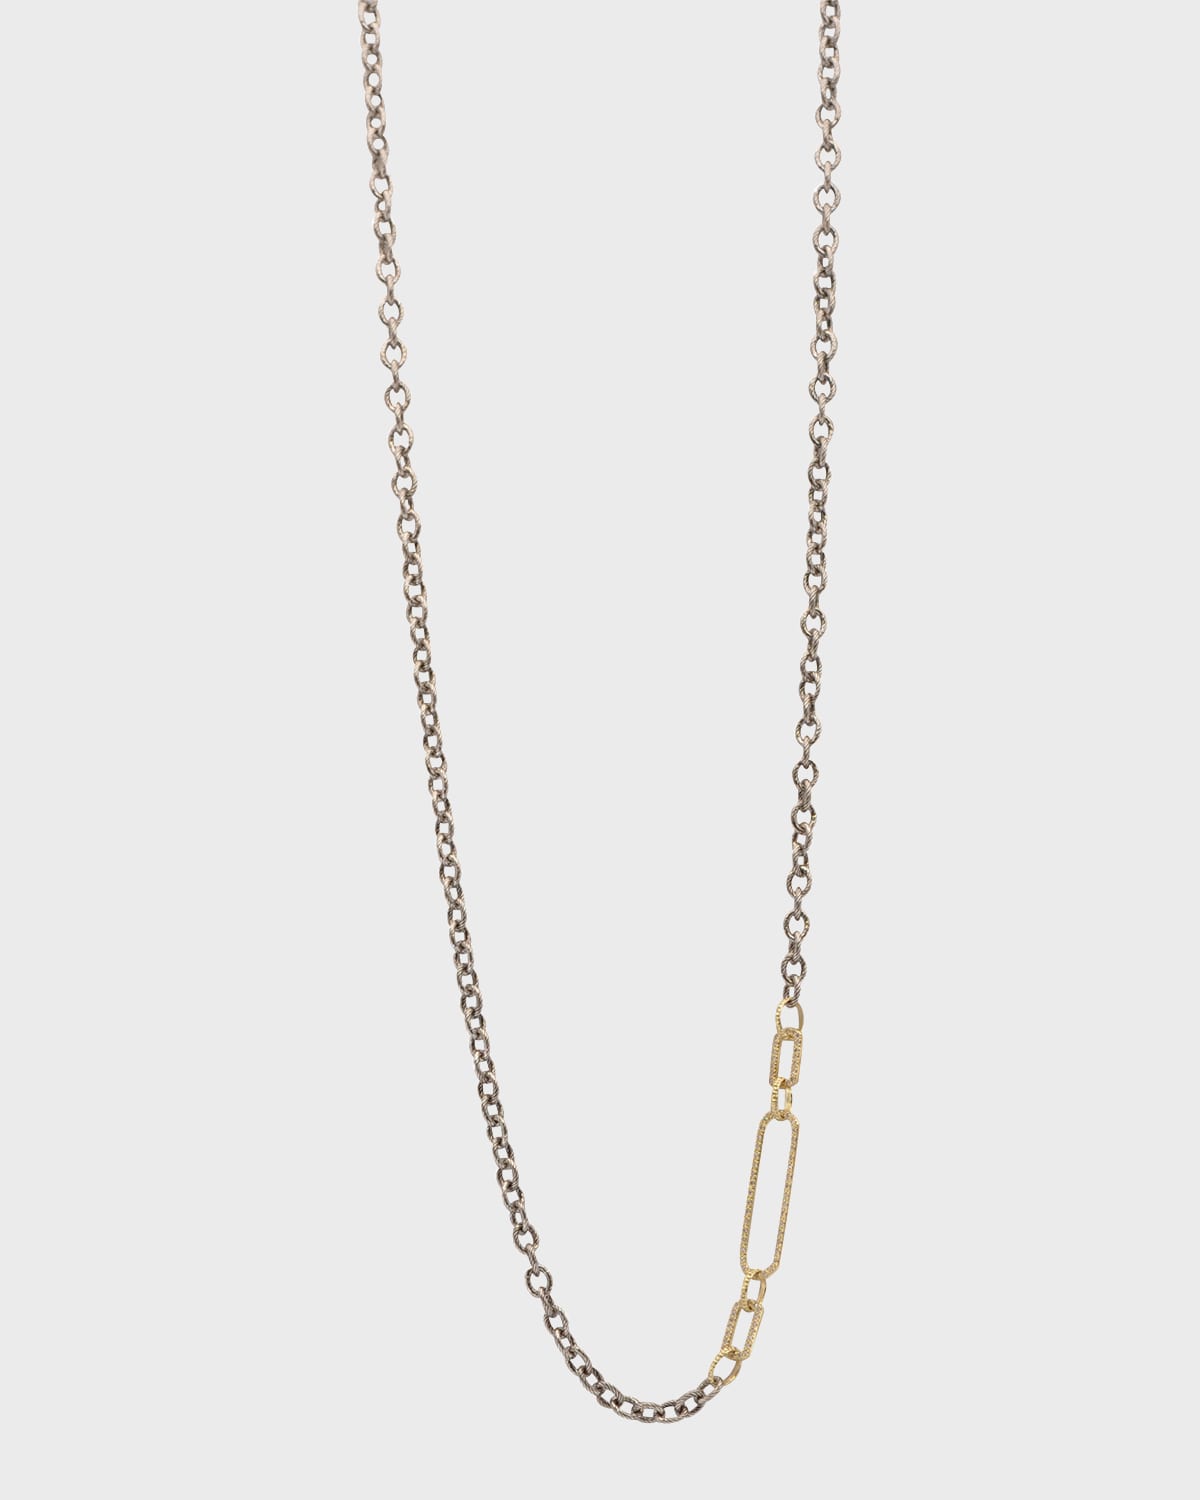 Old World Pavé Diamond Paperclip Chain Link Necklace, 30"L